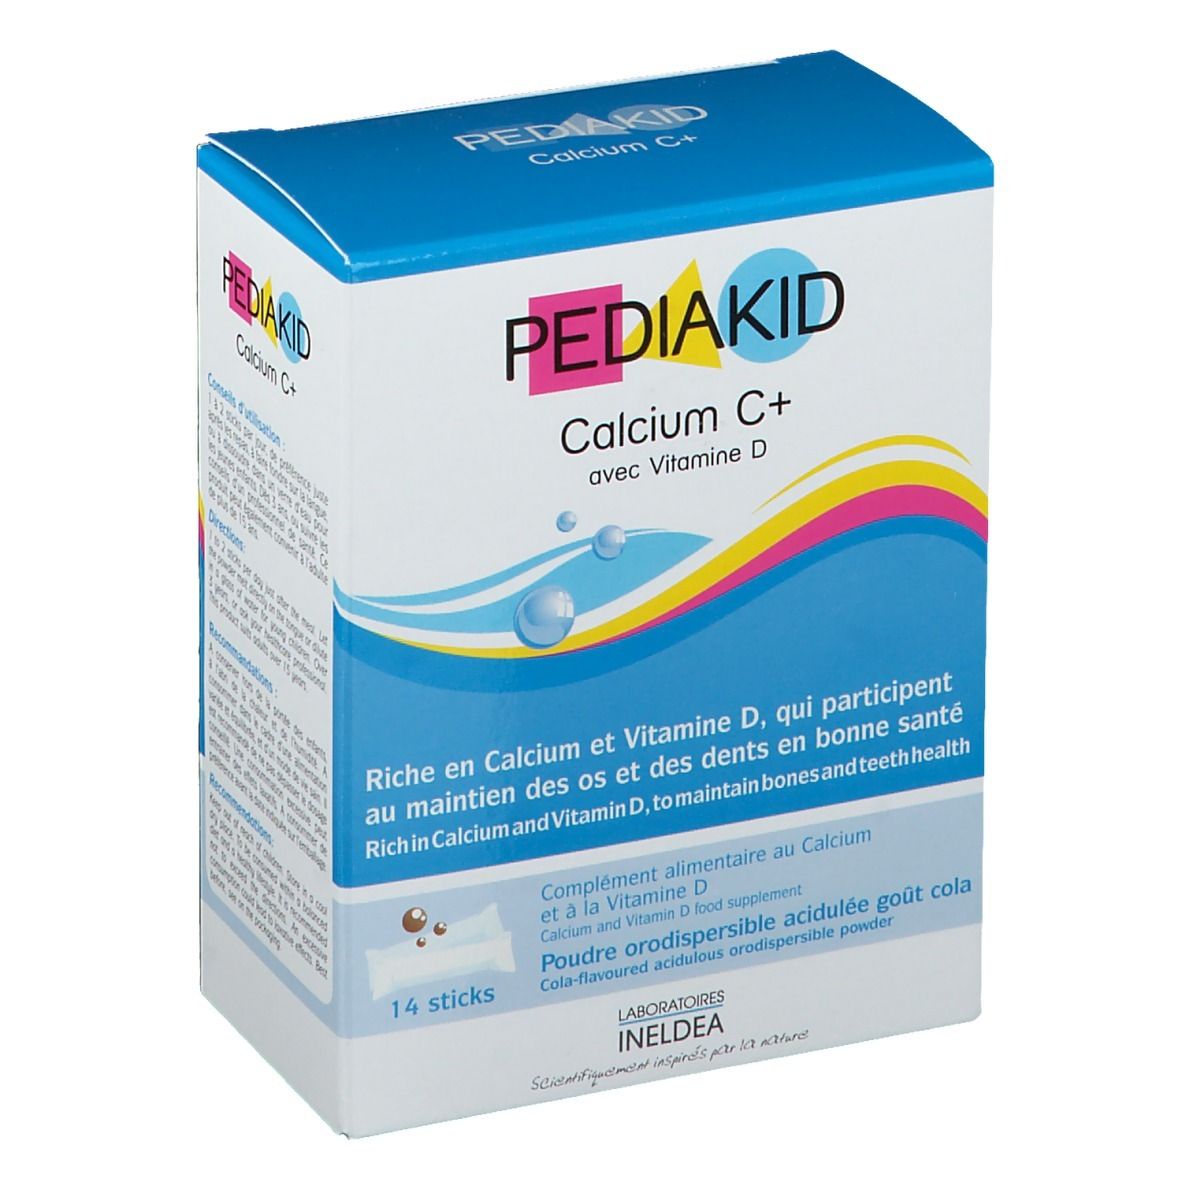 PEDIAKID - Calcium C+ et Vitamine D - Complément Alimentaire Naturel -  Couvre 100% des AJR en Calcium 